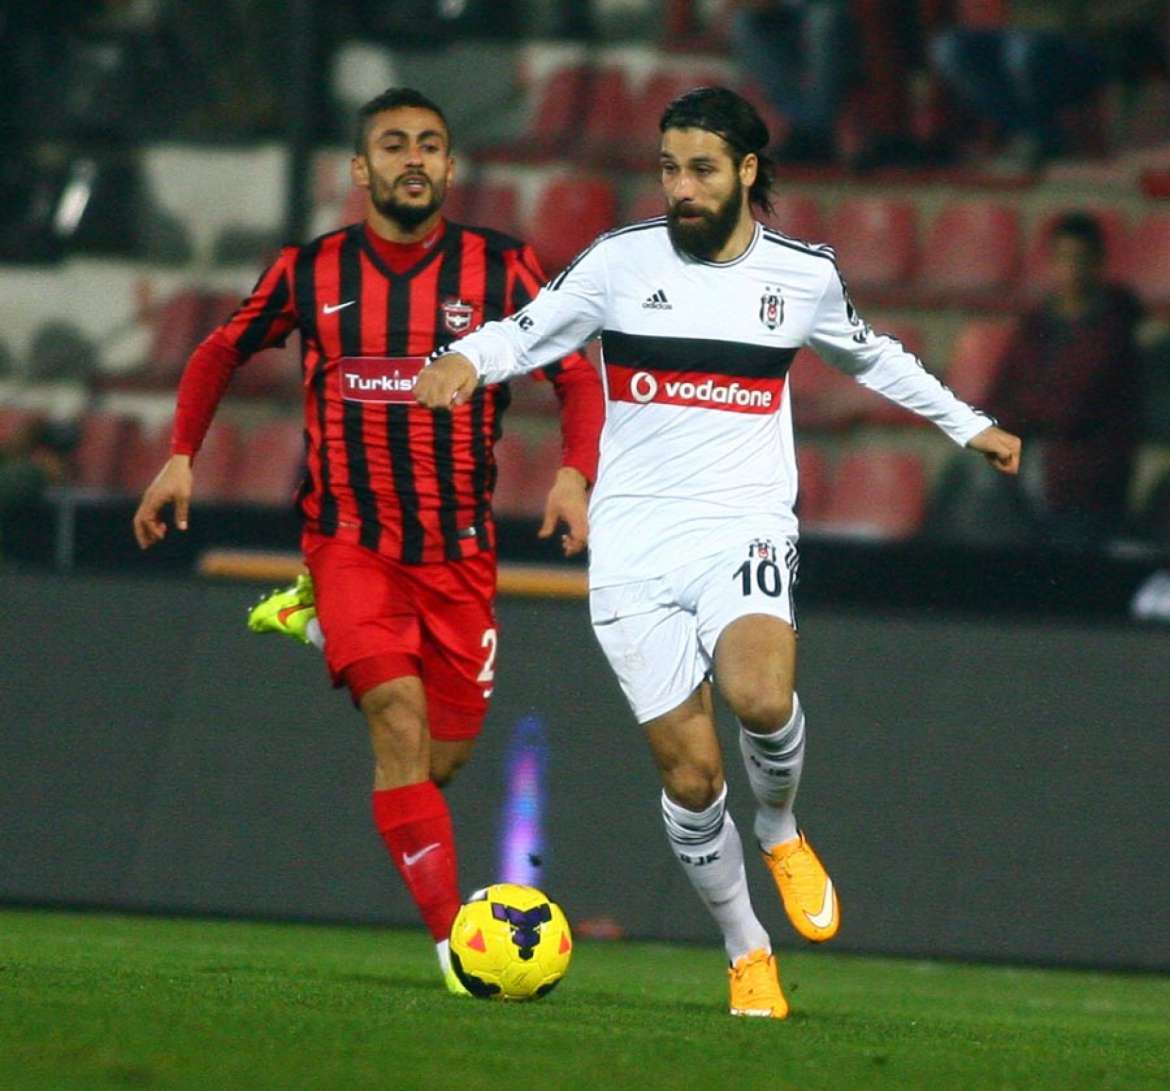 GAZIANTEPSPOR 0:1 Beşiktaş